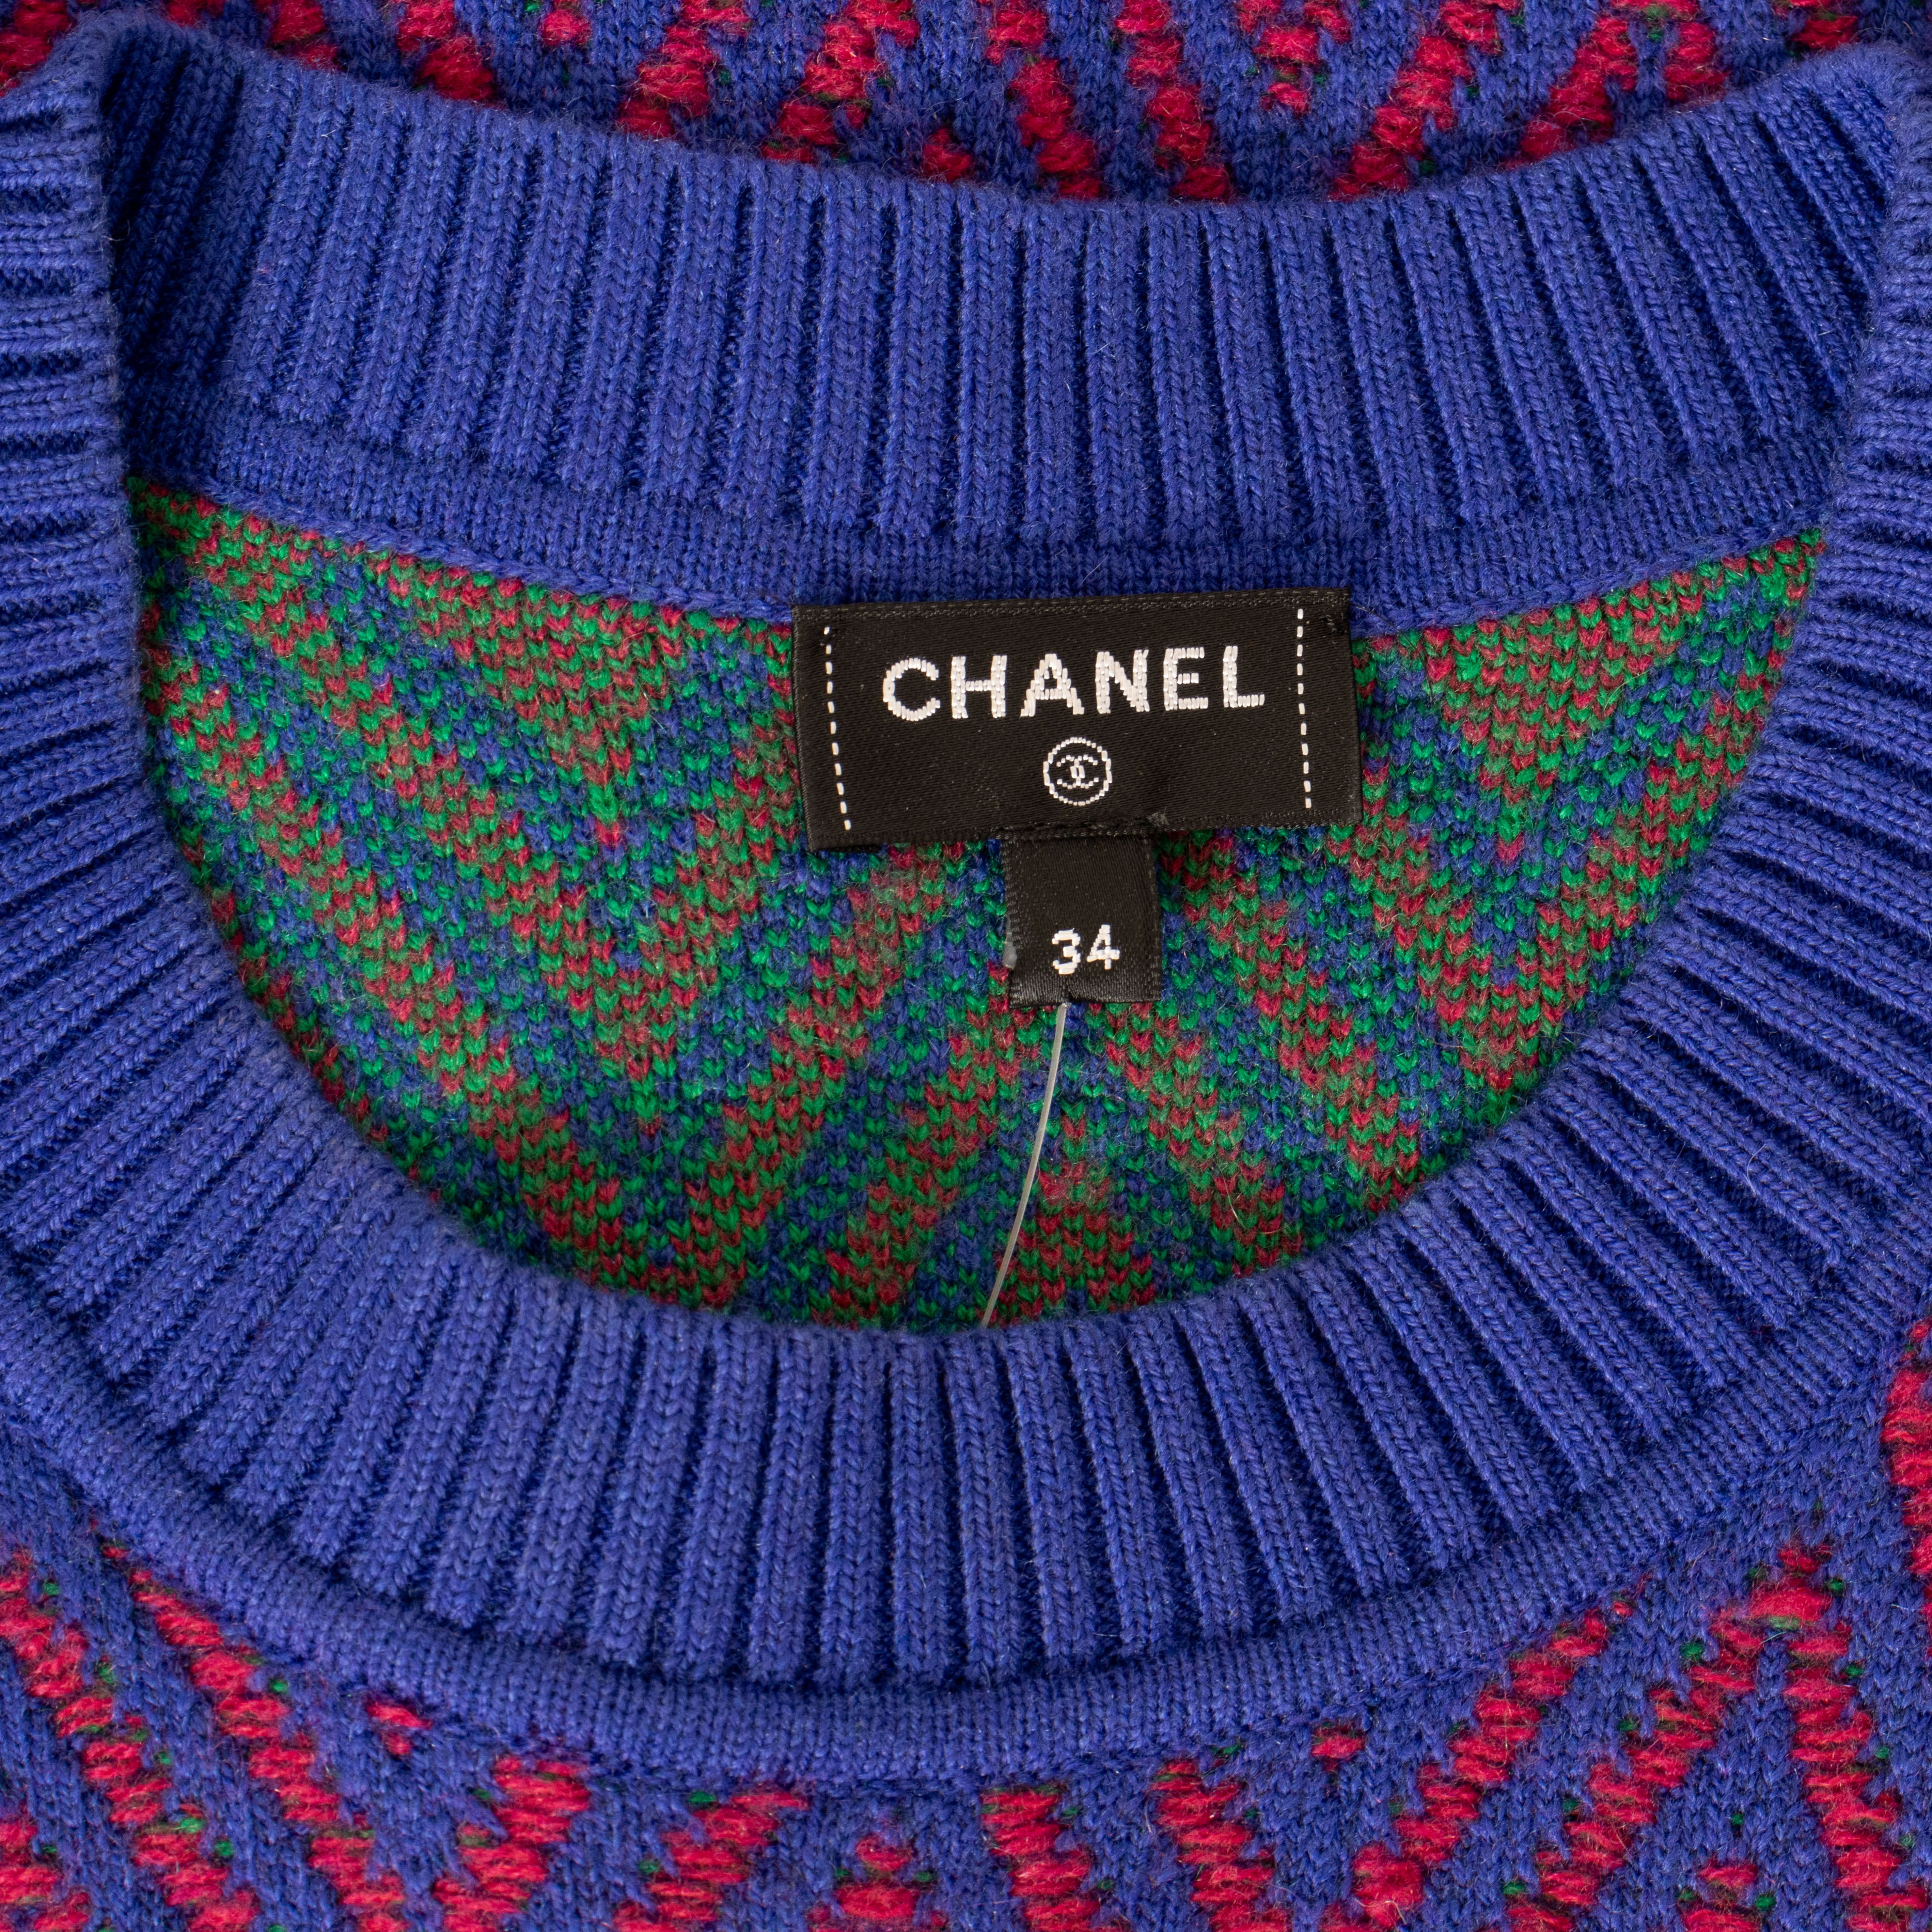 Chanel 34  Vintage chanel clothing, Fashion, Decades of fashion